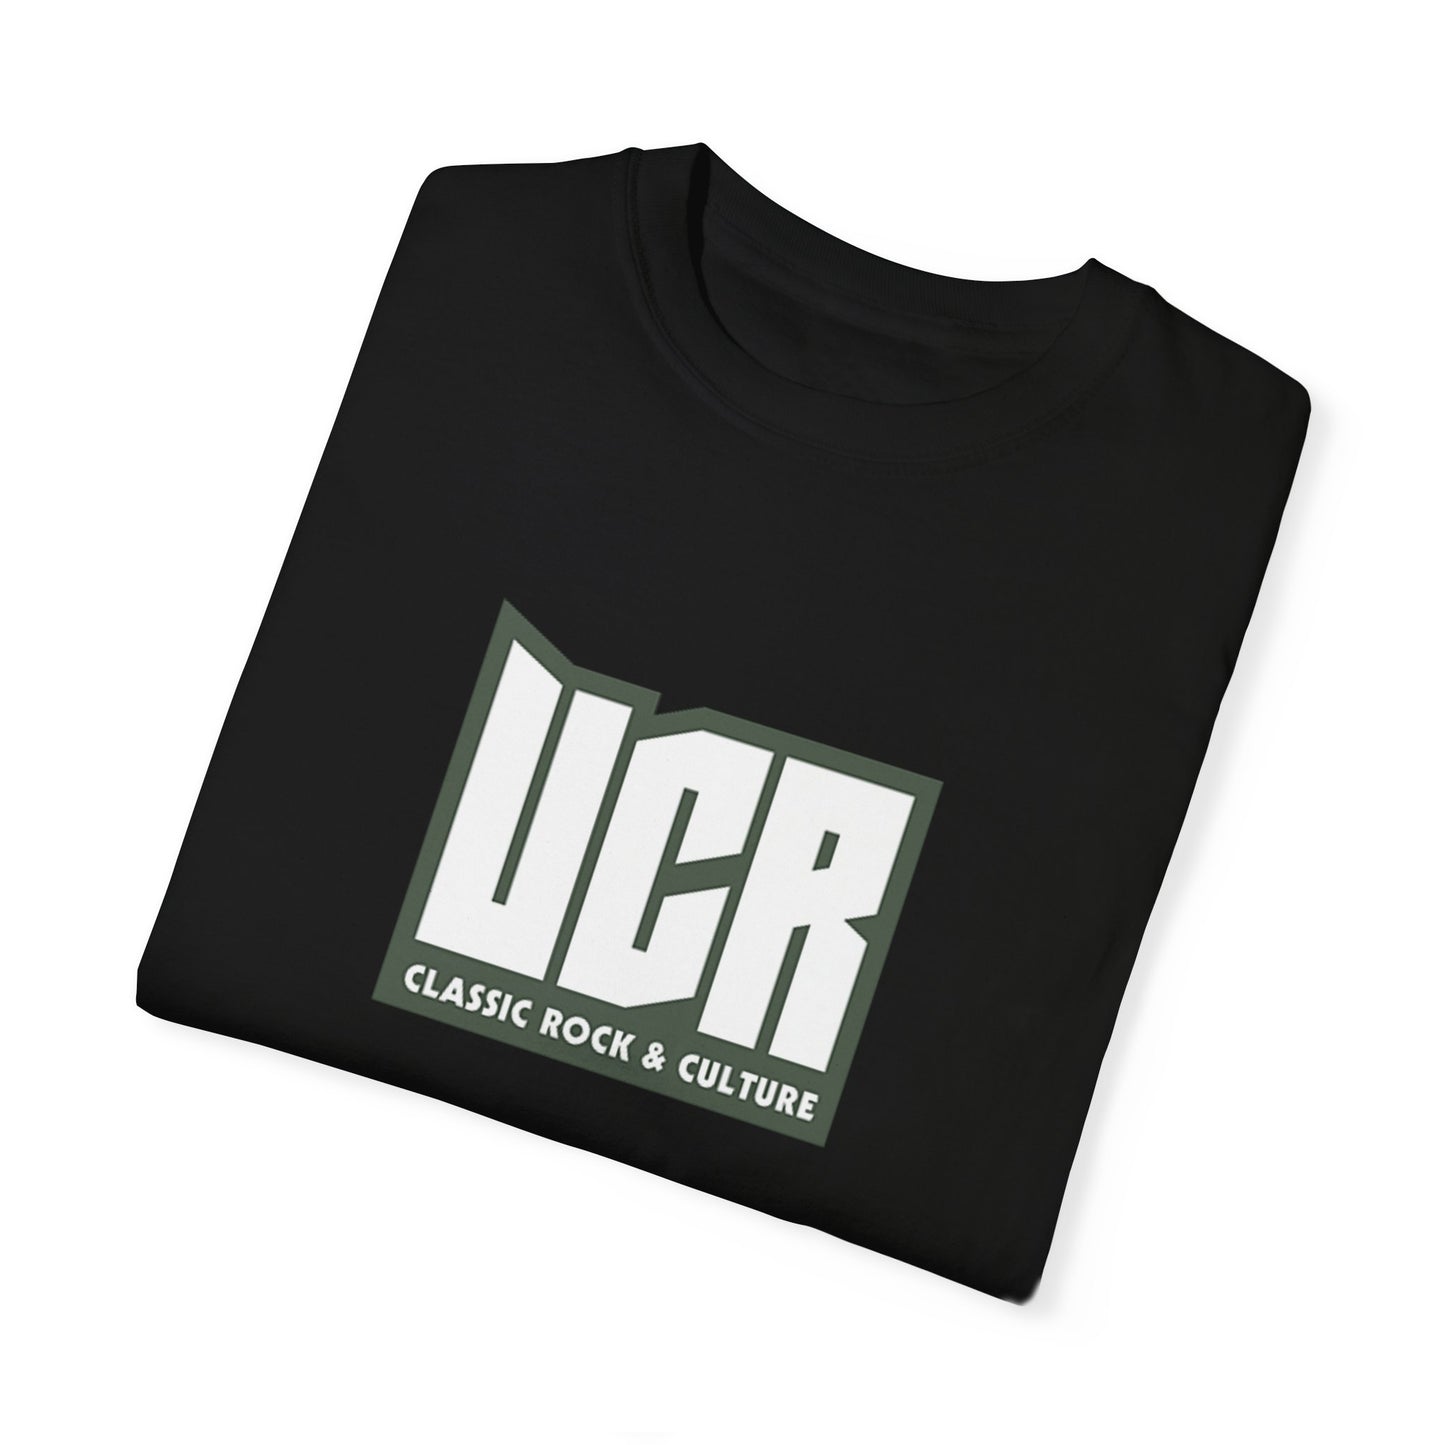 UCR Logo T-shirt